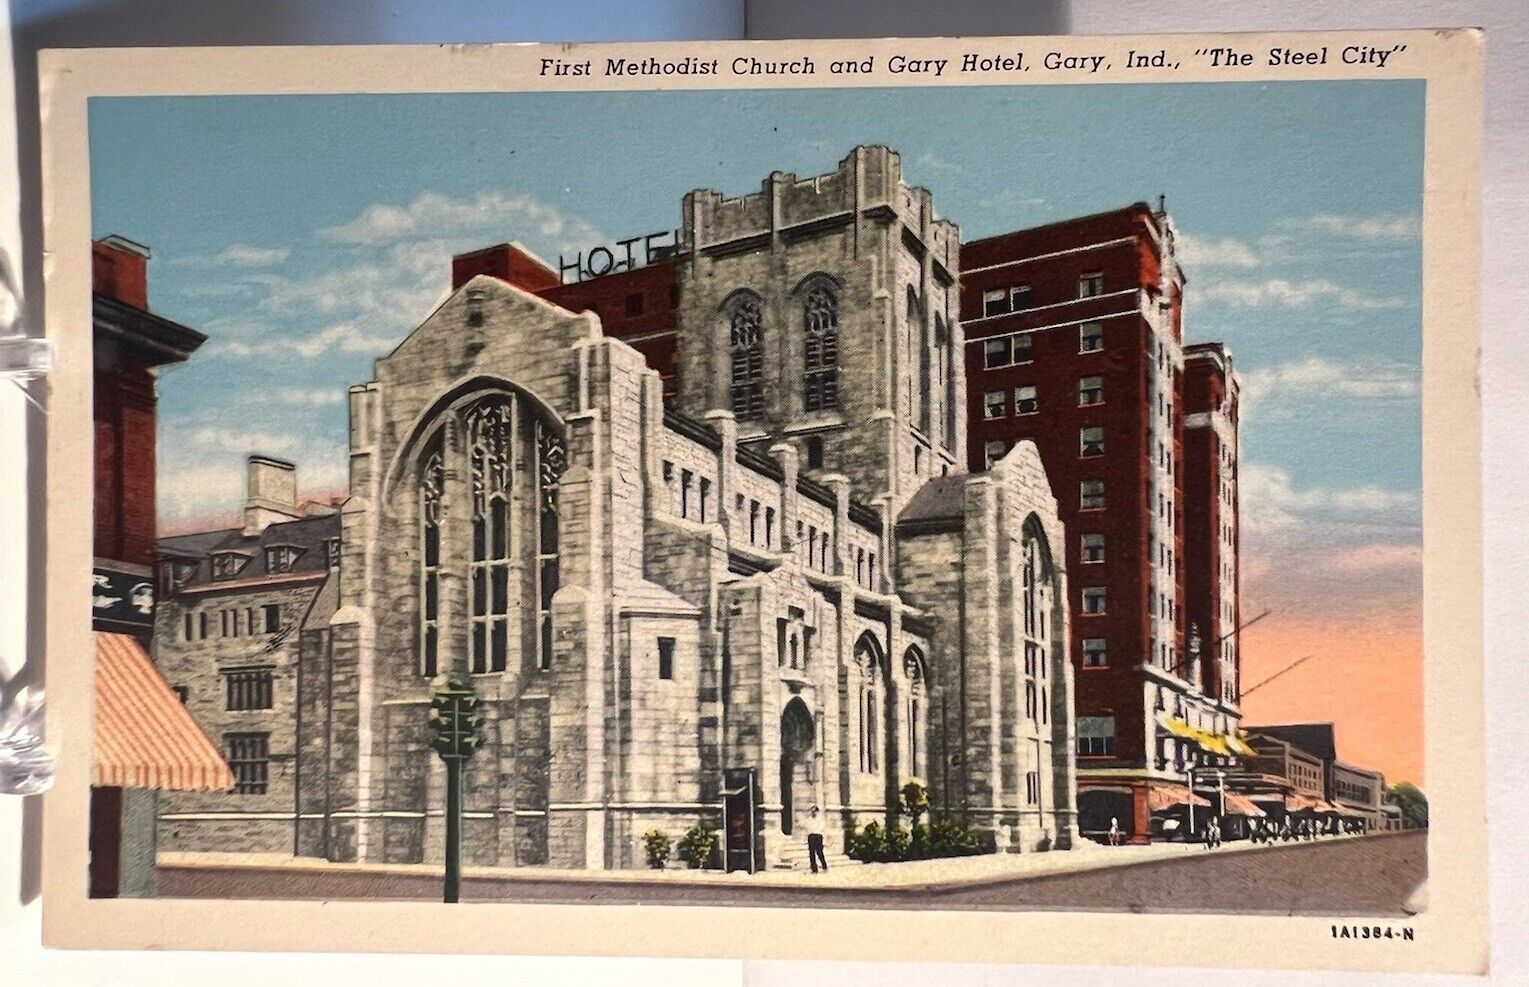 Gary, Indiana First Methodist Church and Gary Hotel - “Steel City” 1928 Postcard